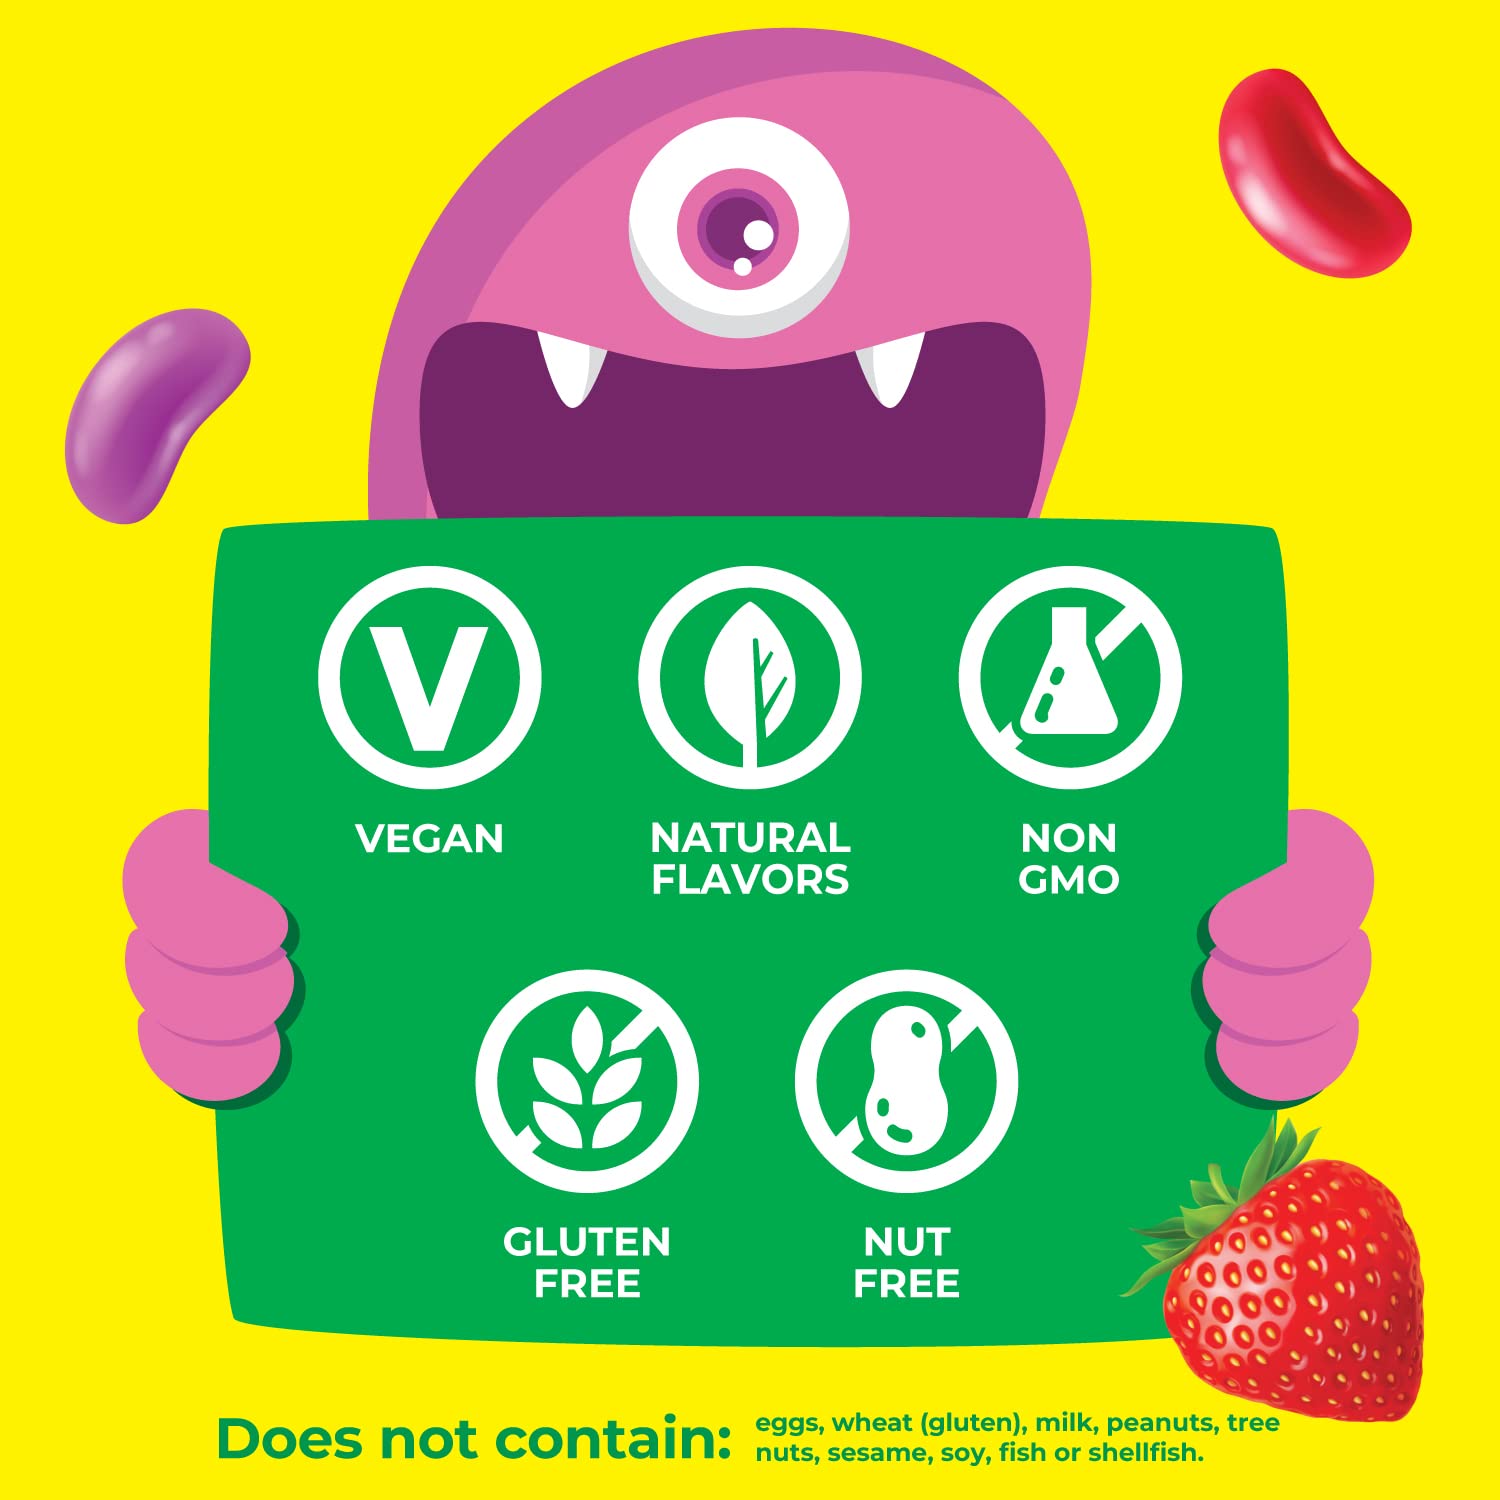 VitaWorks Kids Biotin 5000mcg Jelly Beans - Tasty Natural Strawberry Blast Flavor - Vegan, GMO-Free, Gluten Free, Nut Free - Dietary Supplement - Hair Skin and Nails Vitamins for Children - 60 Jellies